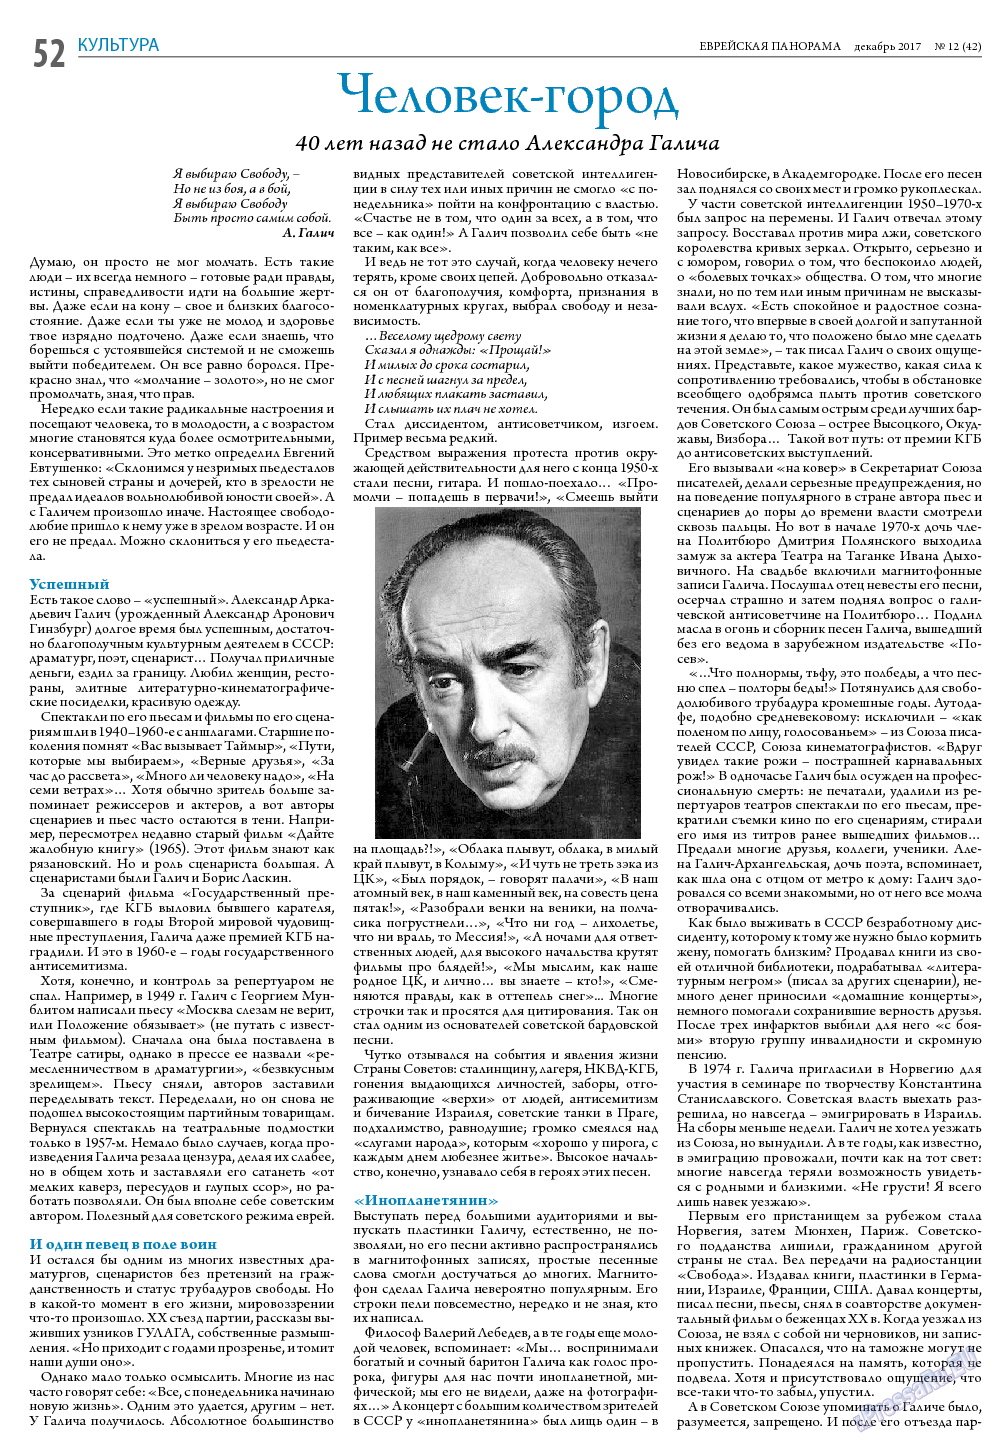 Еврейская панорама, газета. 2017 №12 стр.52